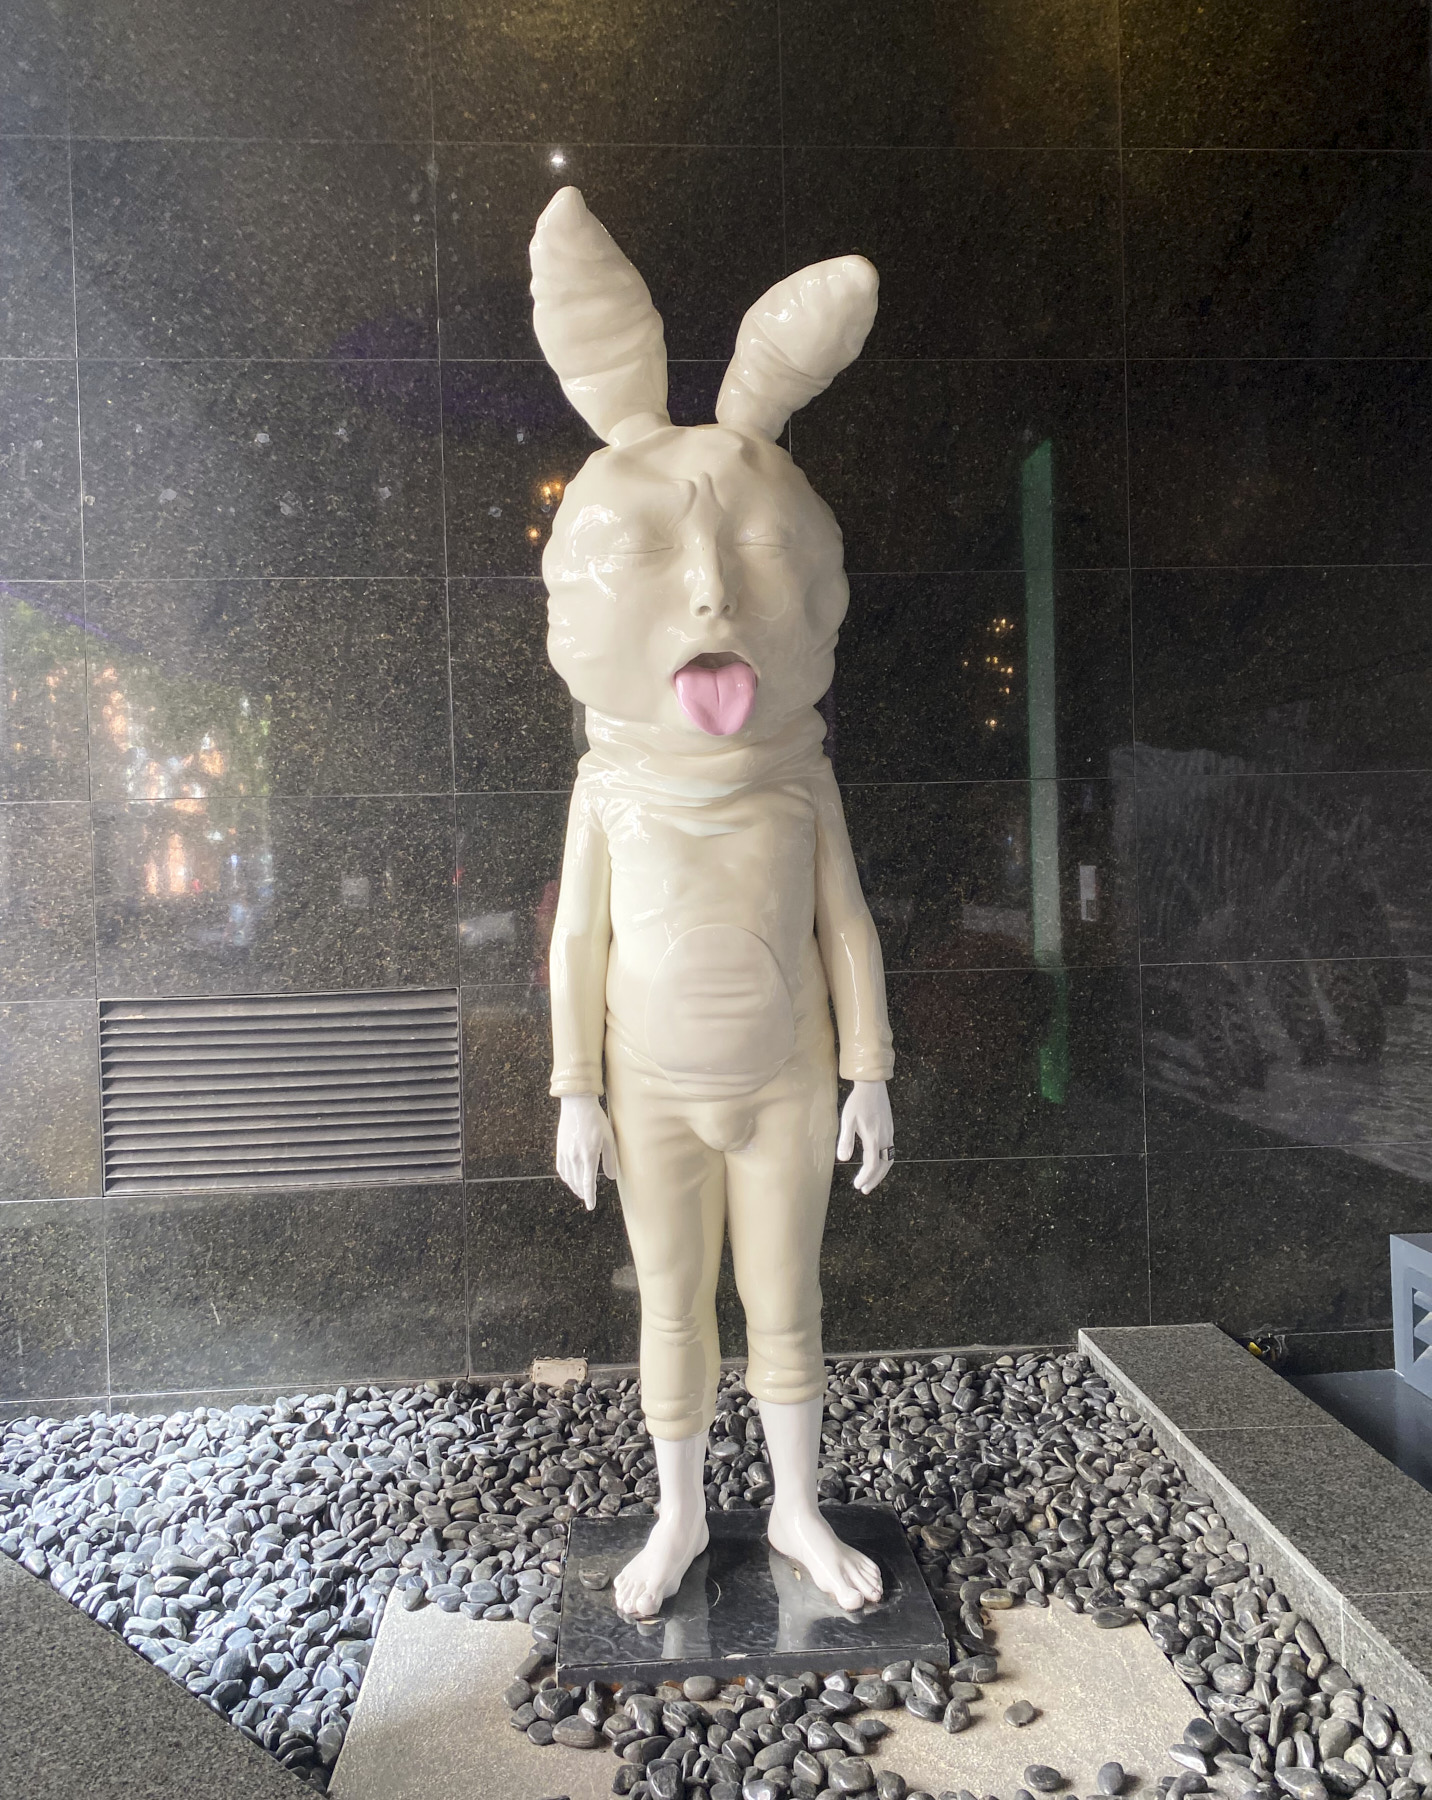 Interesting human bunny artwork